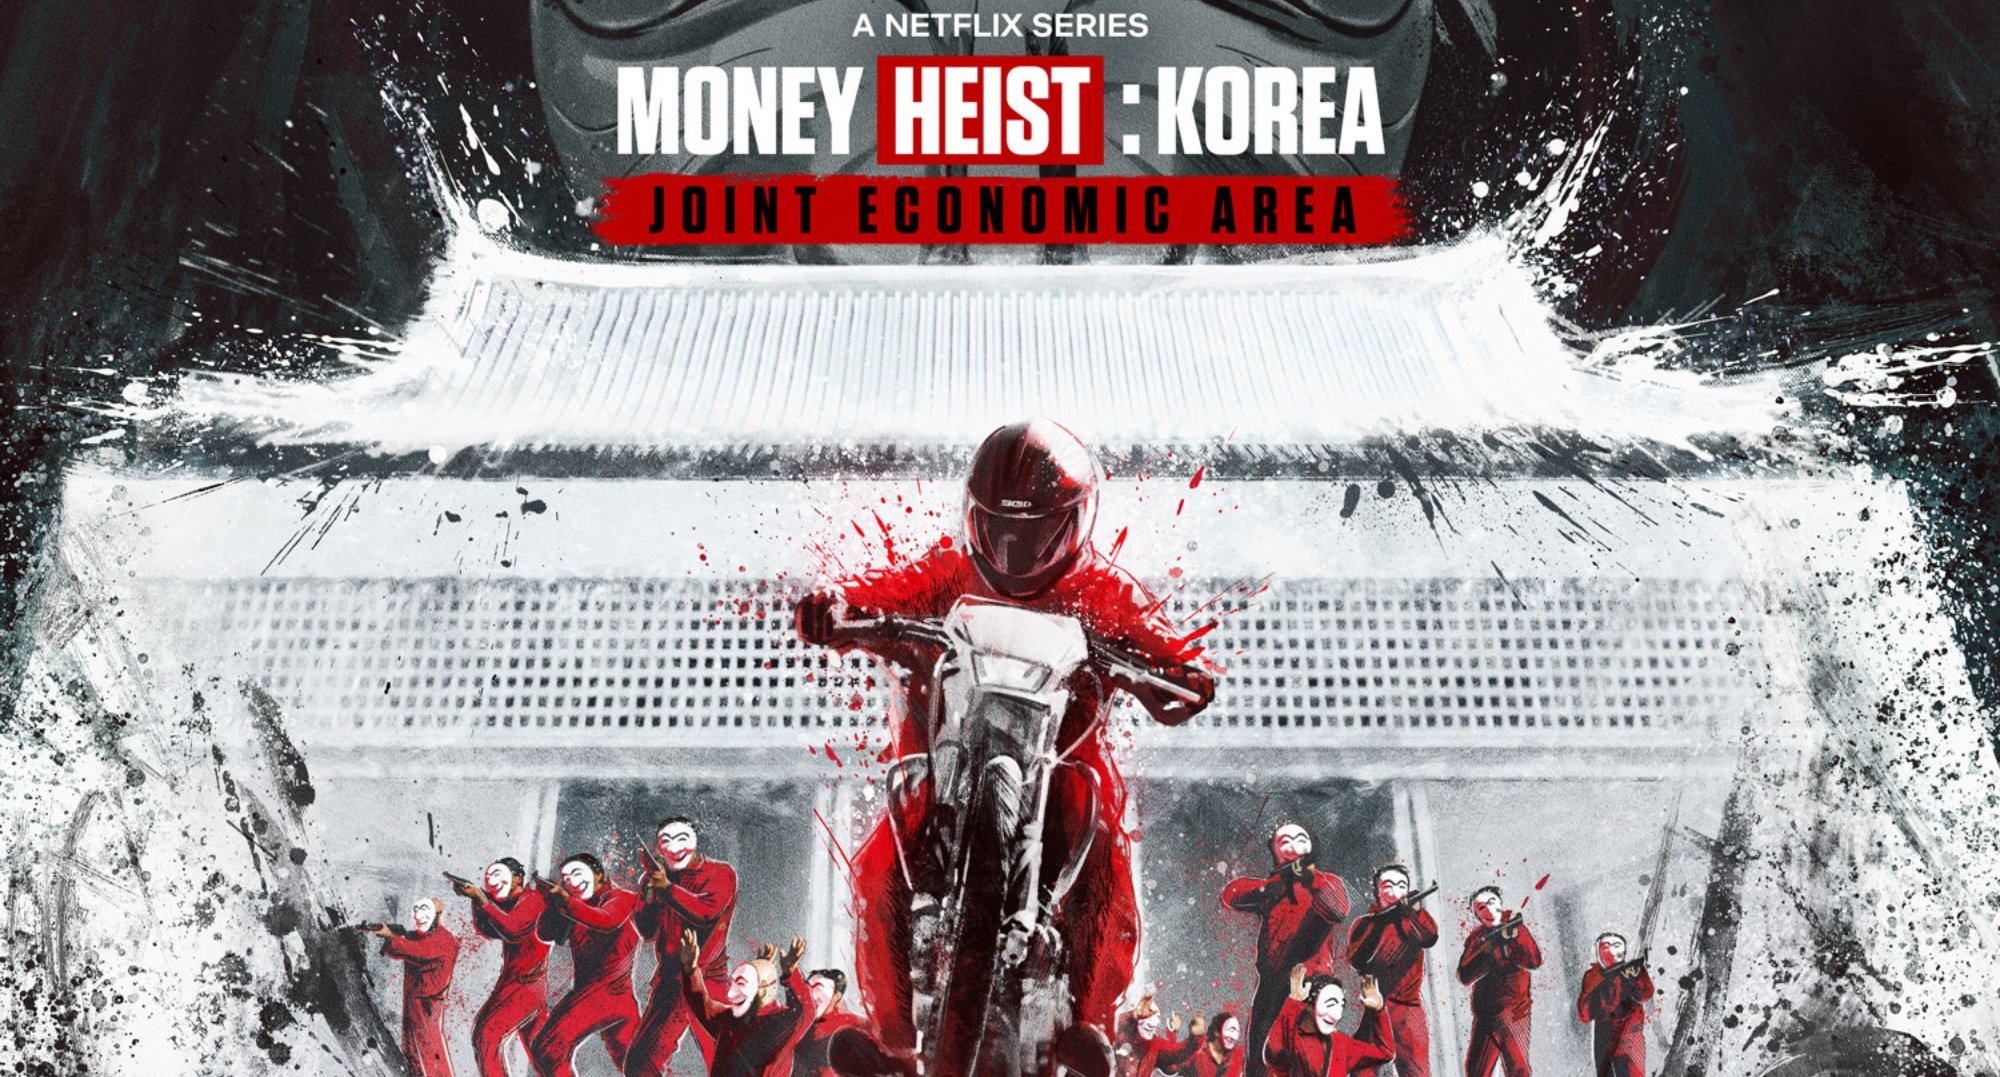 Main poster for K-drama remake 'Money Heist: Korea' Part 2 and trailer.